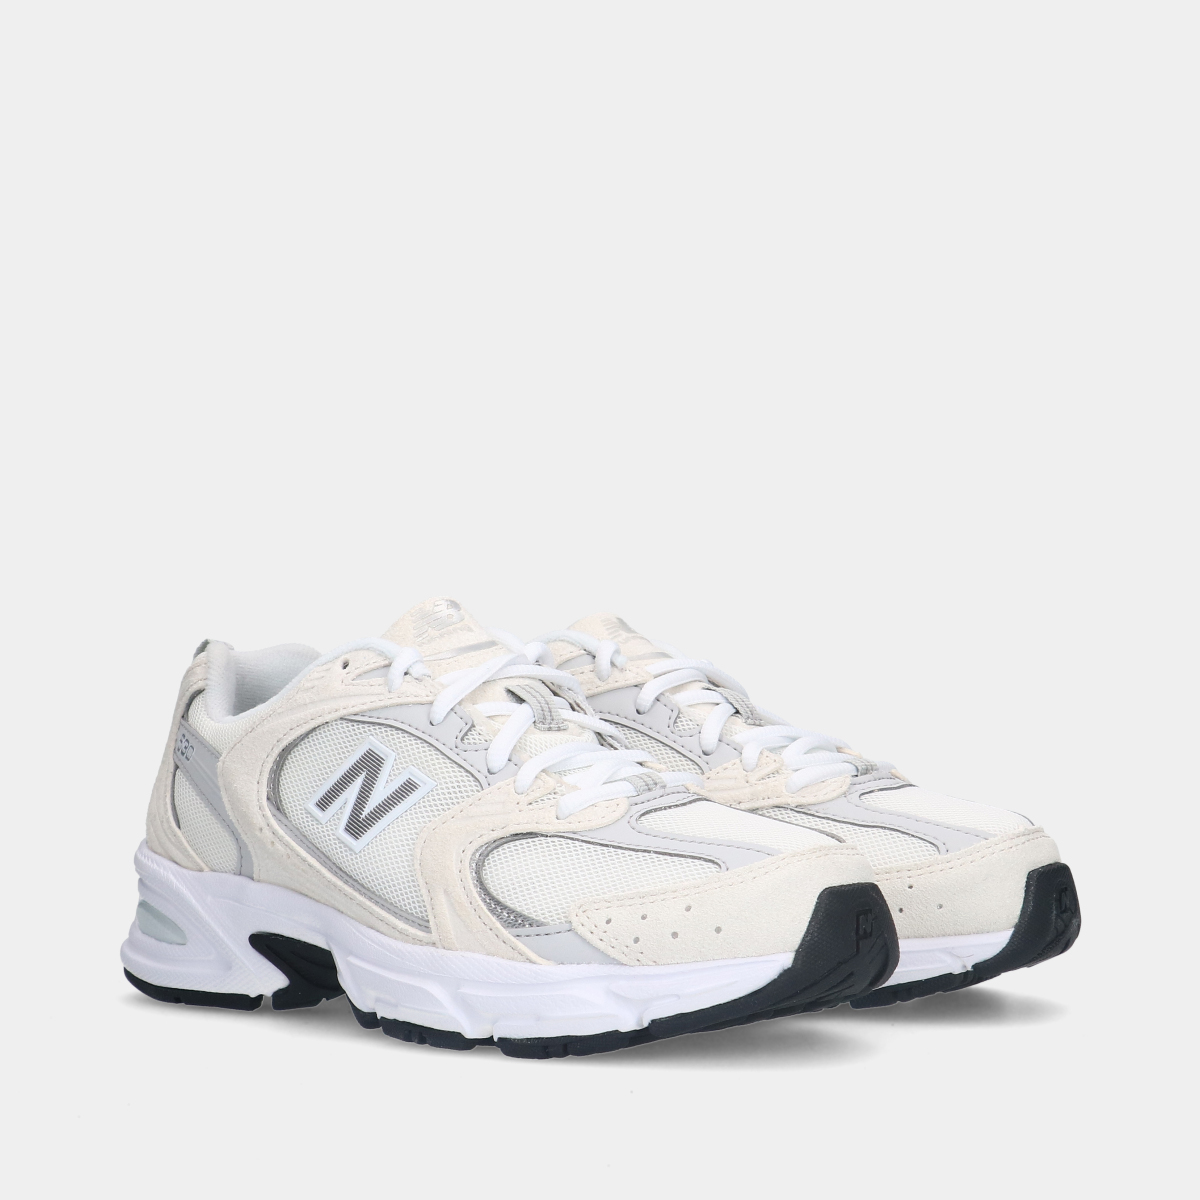 New Balance 530 White unisex sneakers
